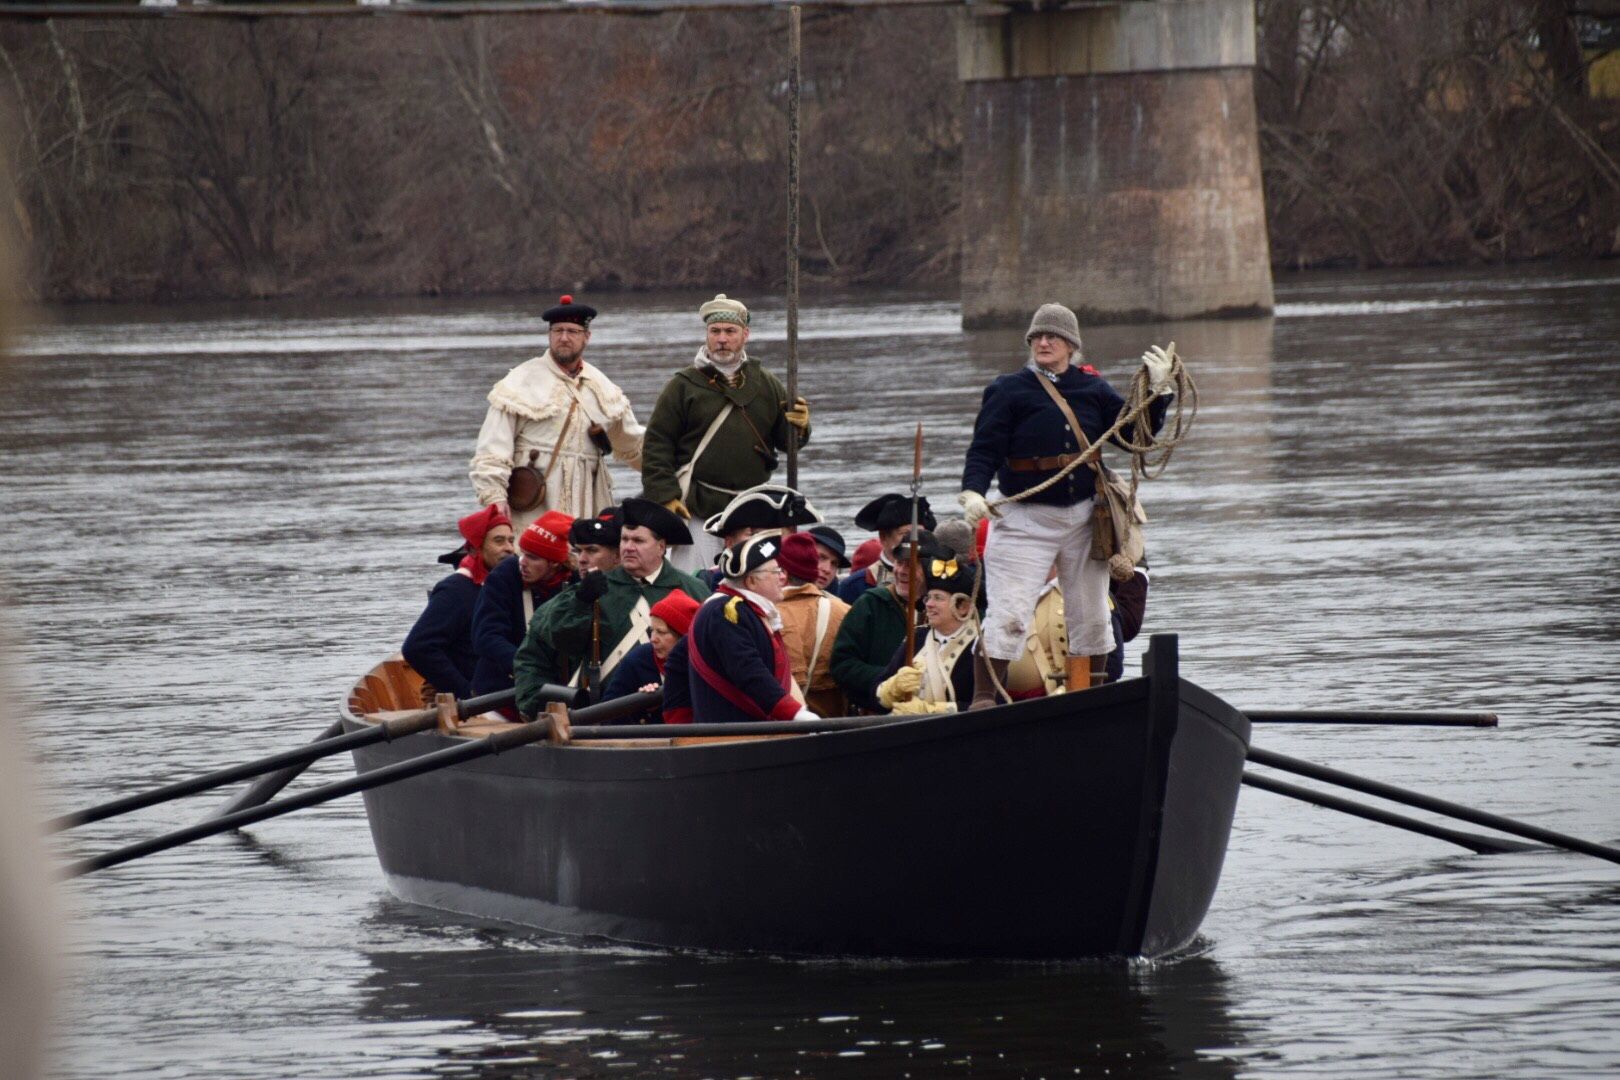 PHOTOS) Washington Crossing Reenactment on the Delaware River